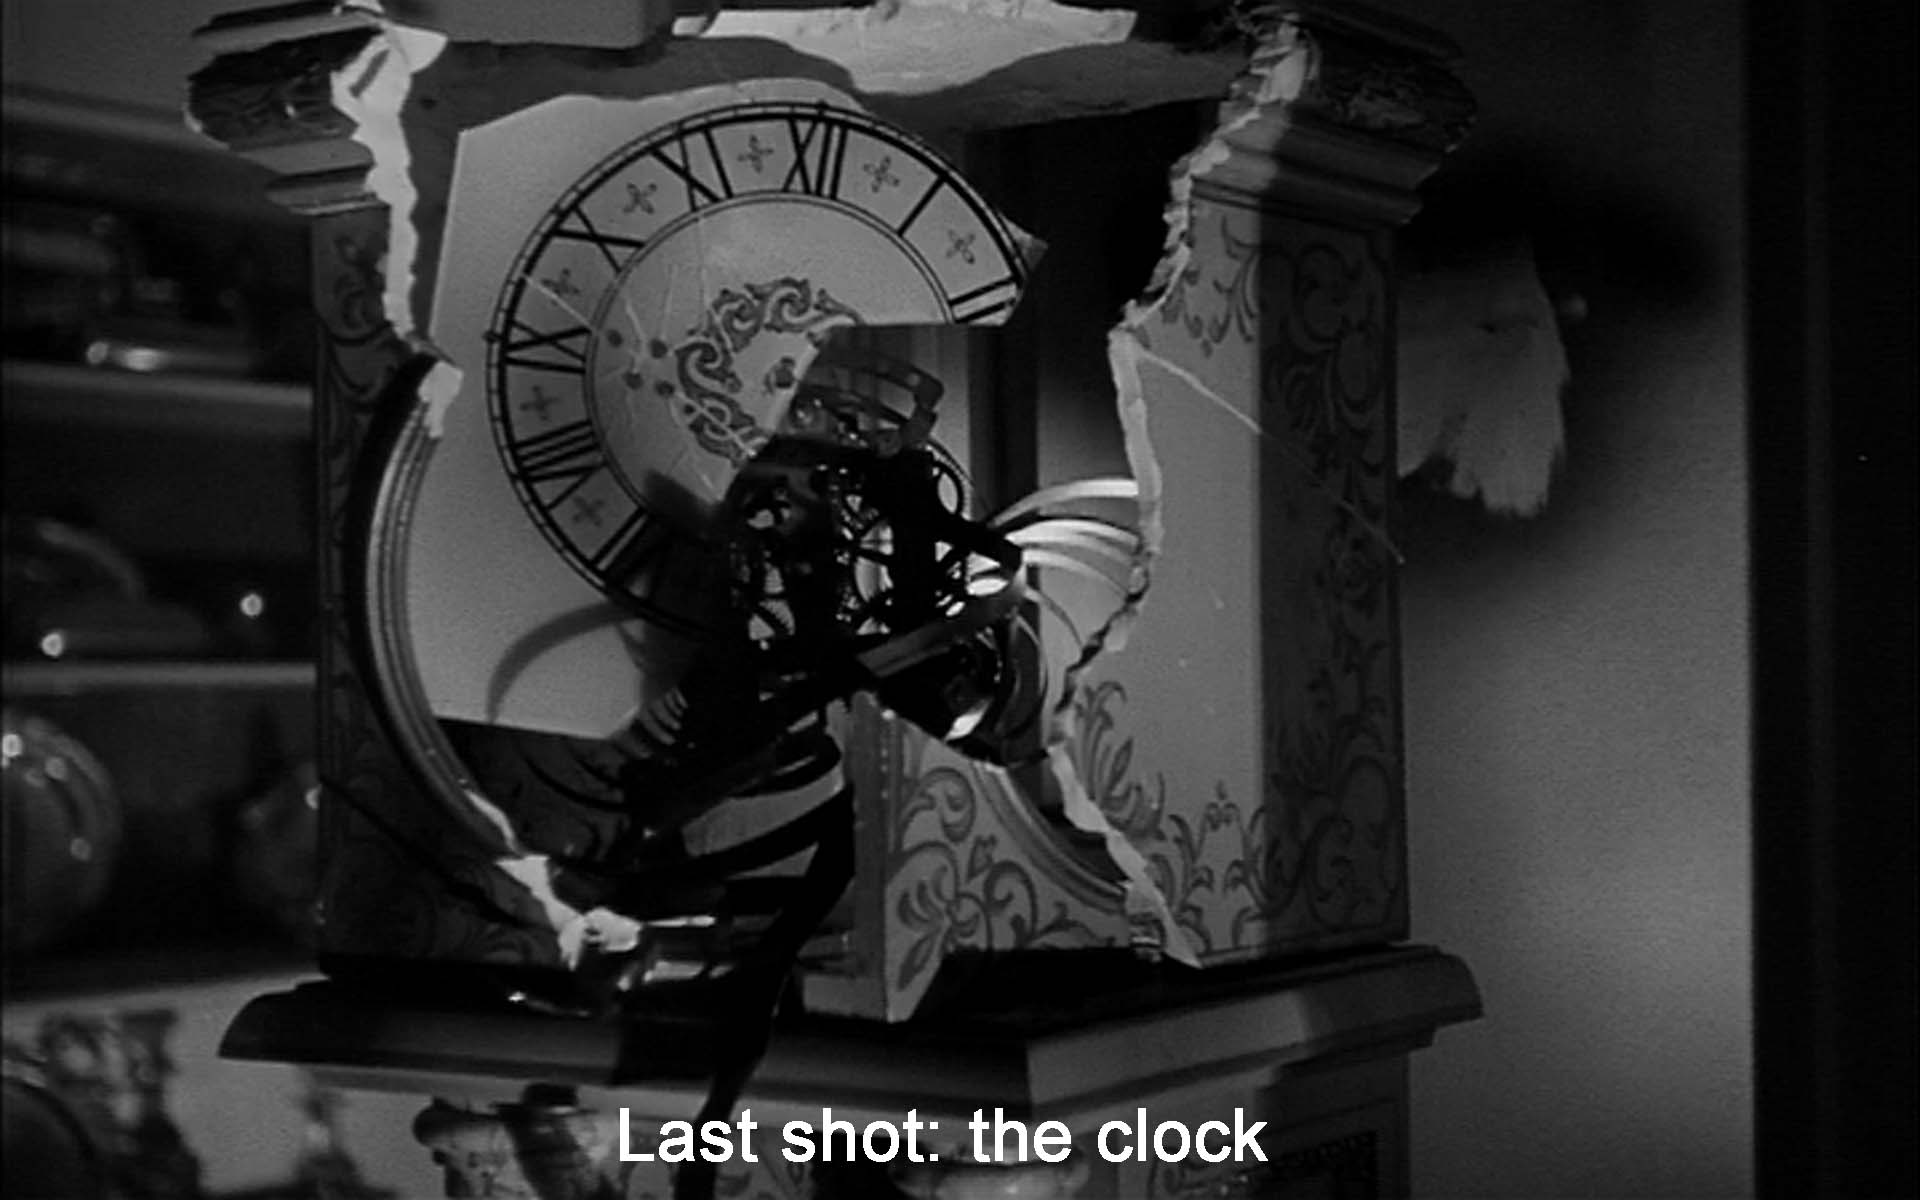 Last shot: the clock